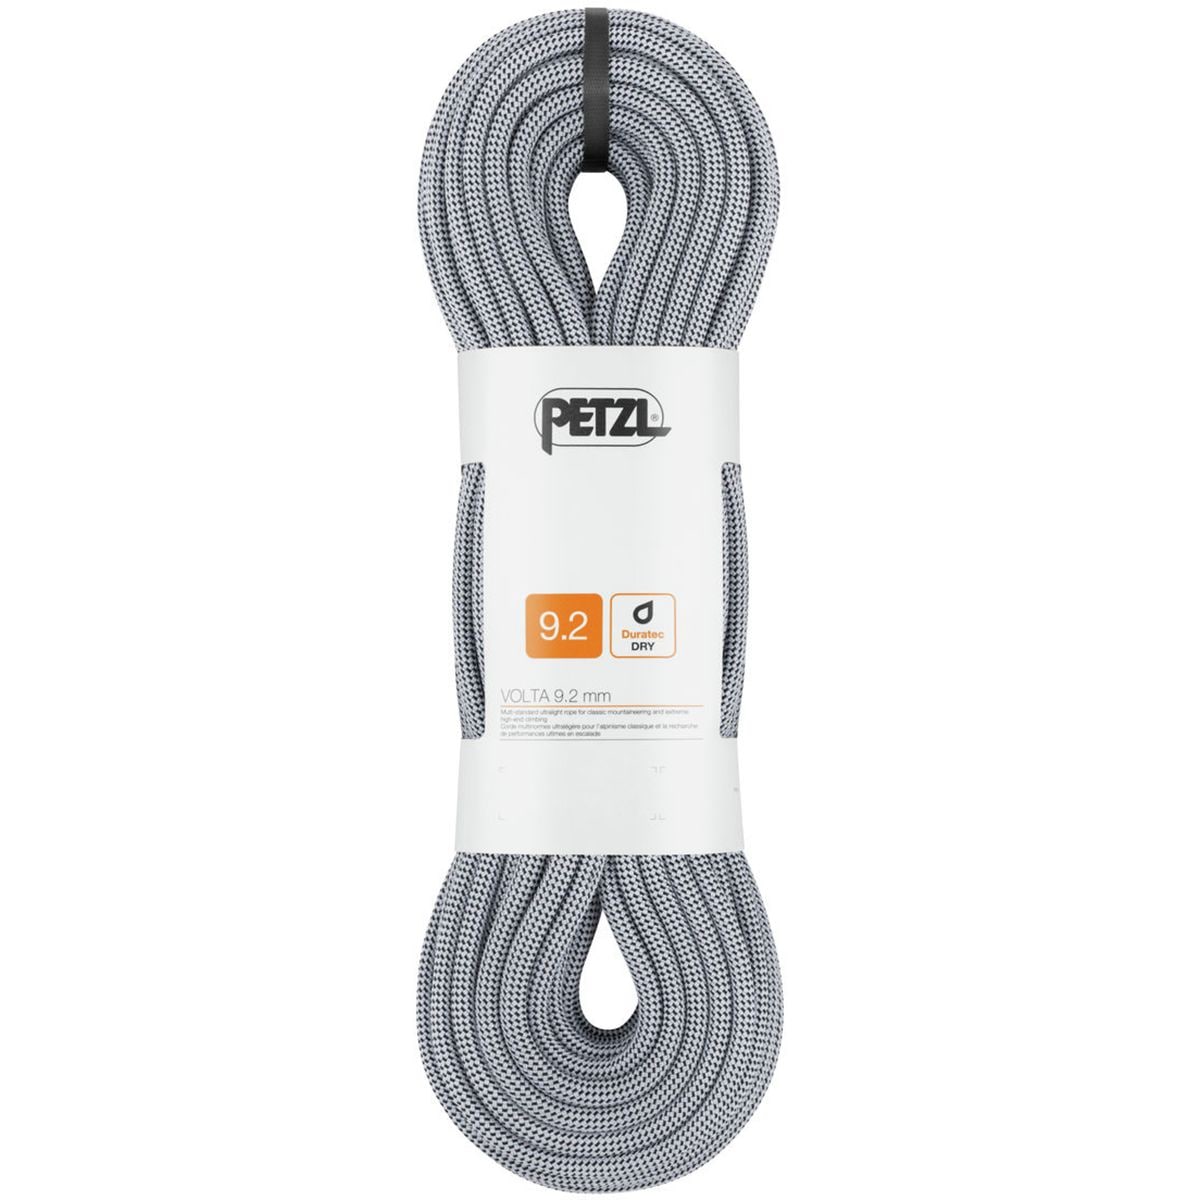 Photos - Climbing Gear Petzl Volta Dry Climbing Rope - 9.2mm 